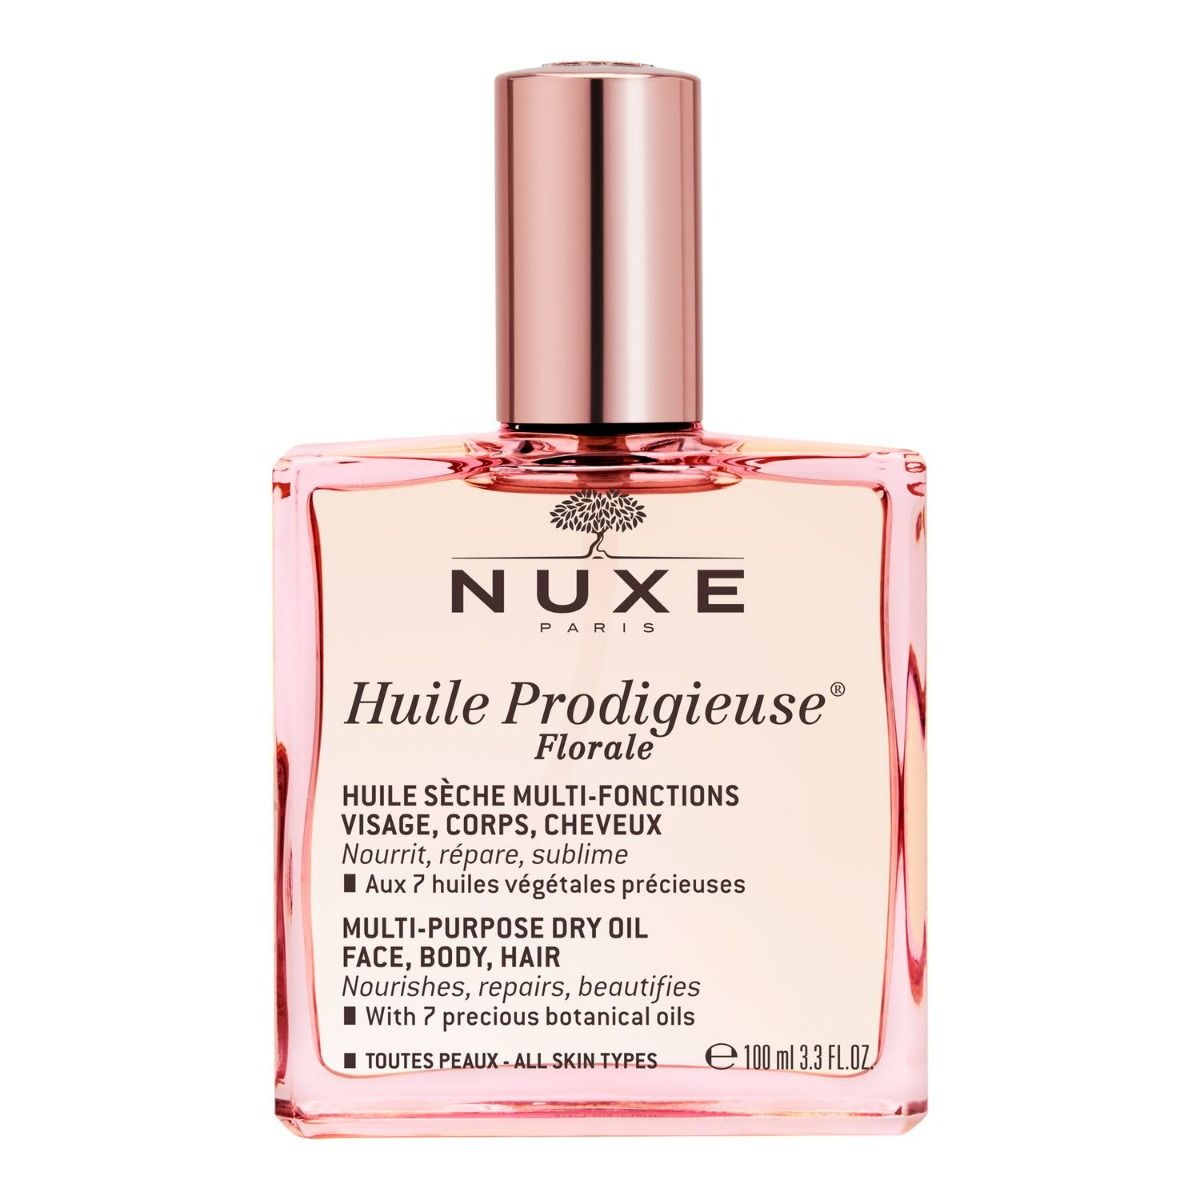 Nuxe Huile Prodigieuse Florale масло для лица, тела и волос, 100 ml nuxe мерцающее сухое масло для лица тела и волос huile or 100 мл nuxe prodigieuse